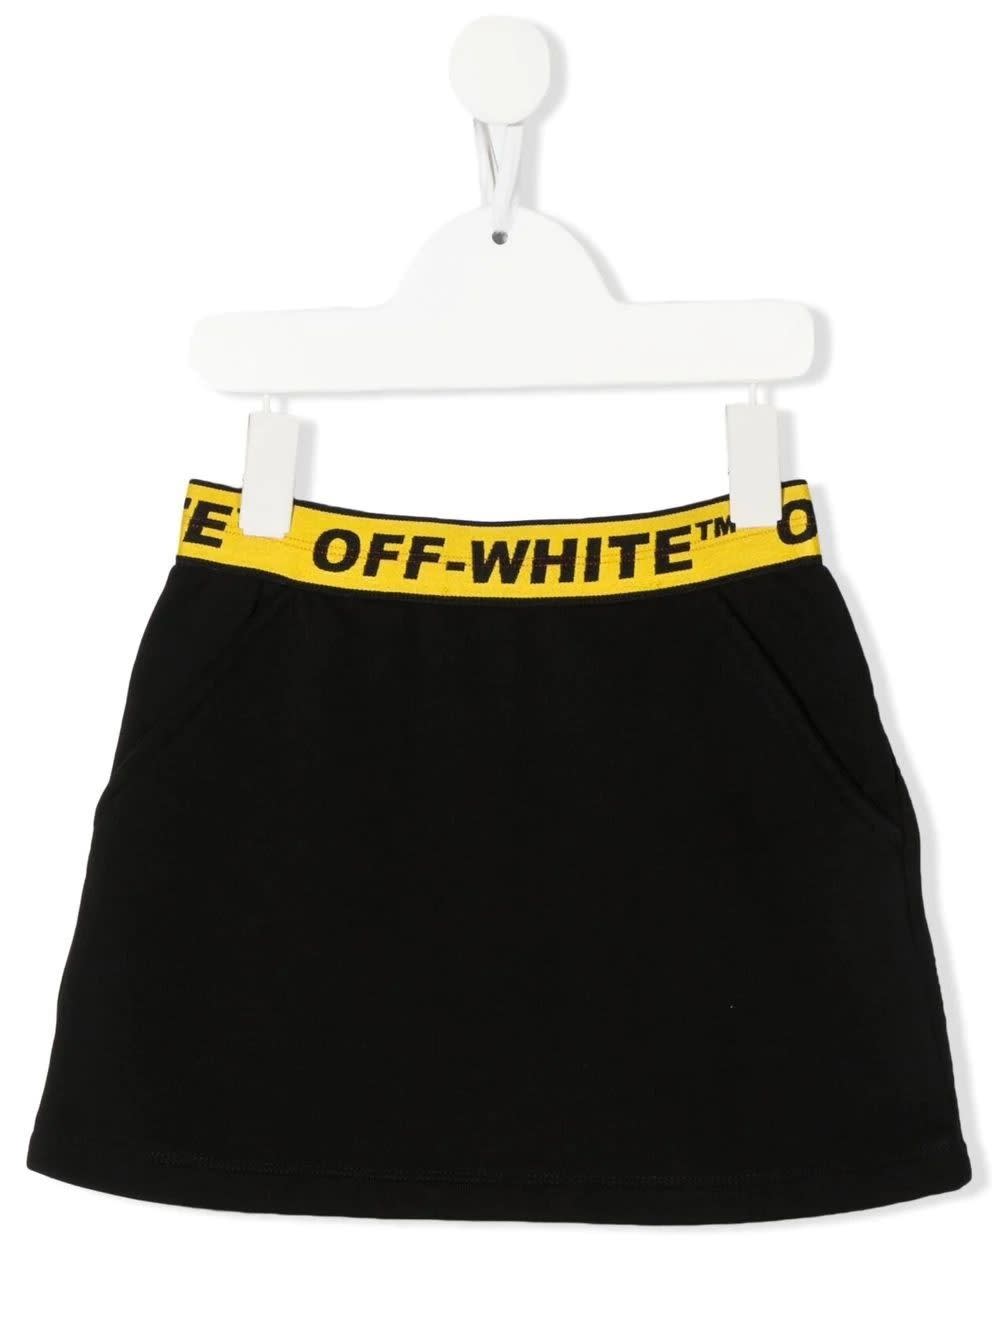 Off-White Black Cotton Skirt